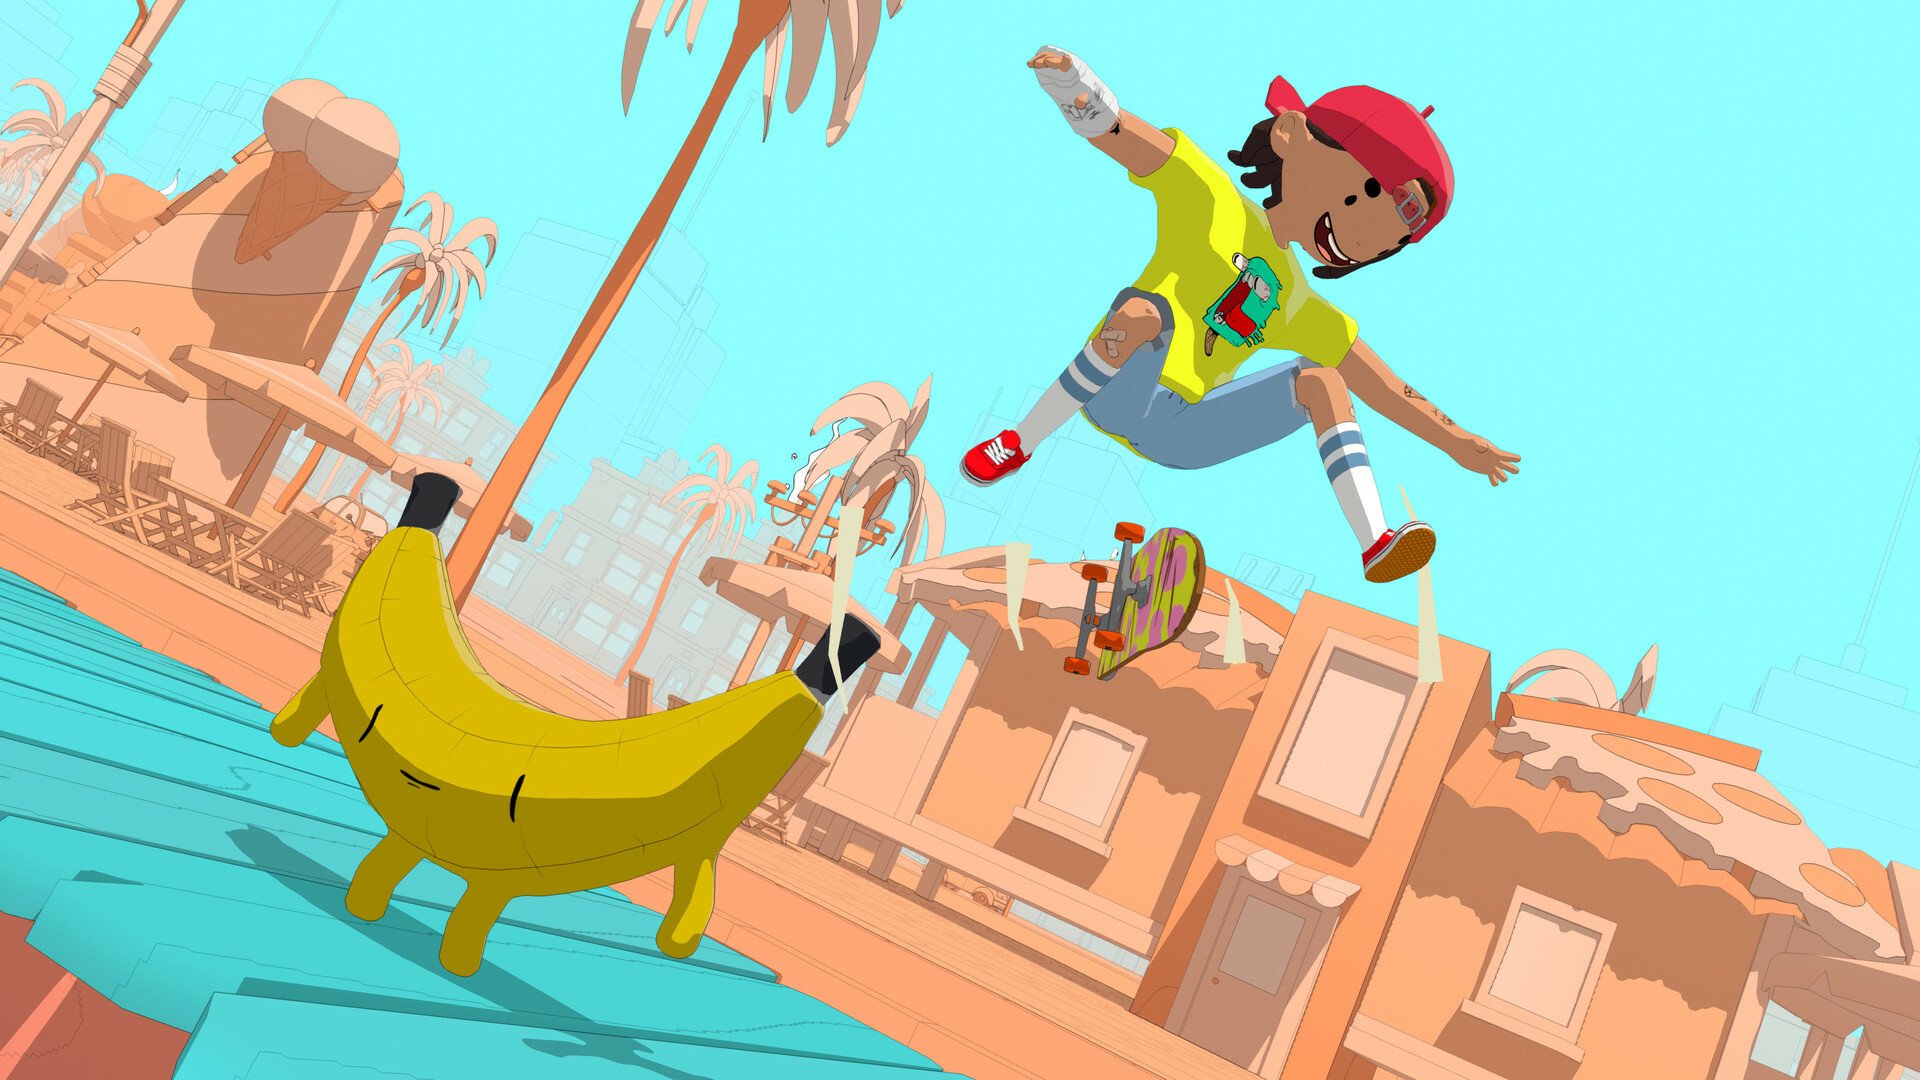 A screenshot from "OlliOlli World." A skateboarder jumps over an anthropomorphized banana.